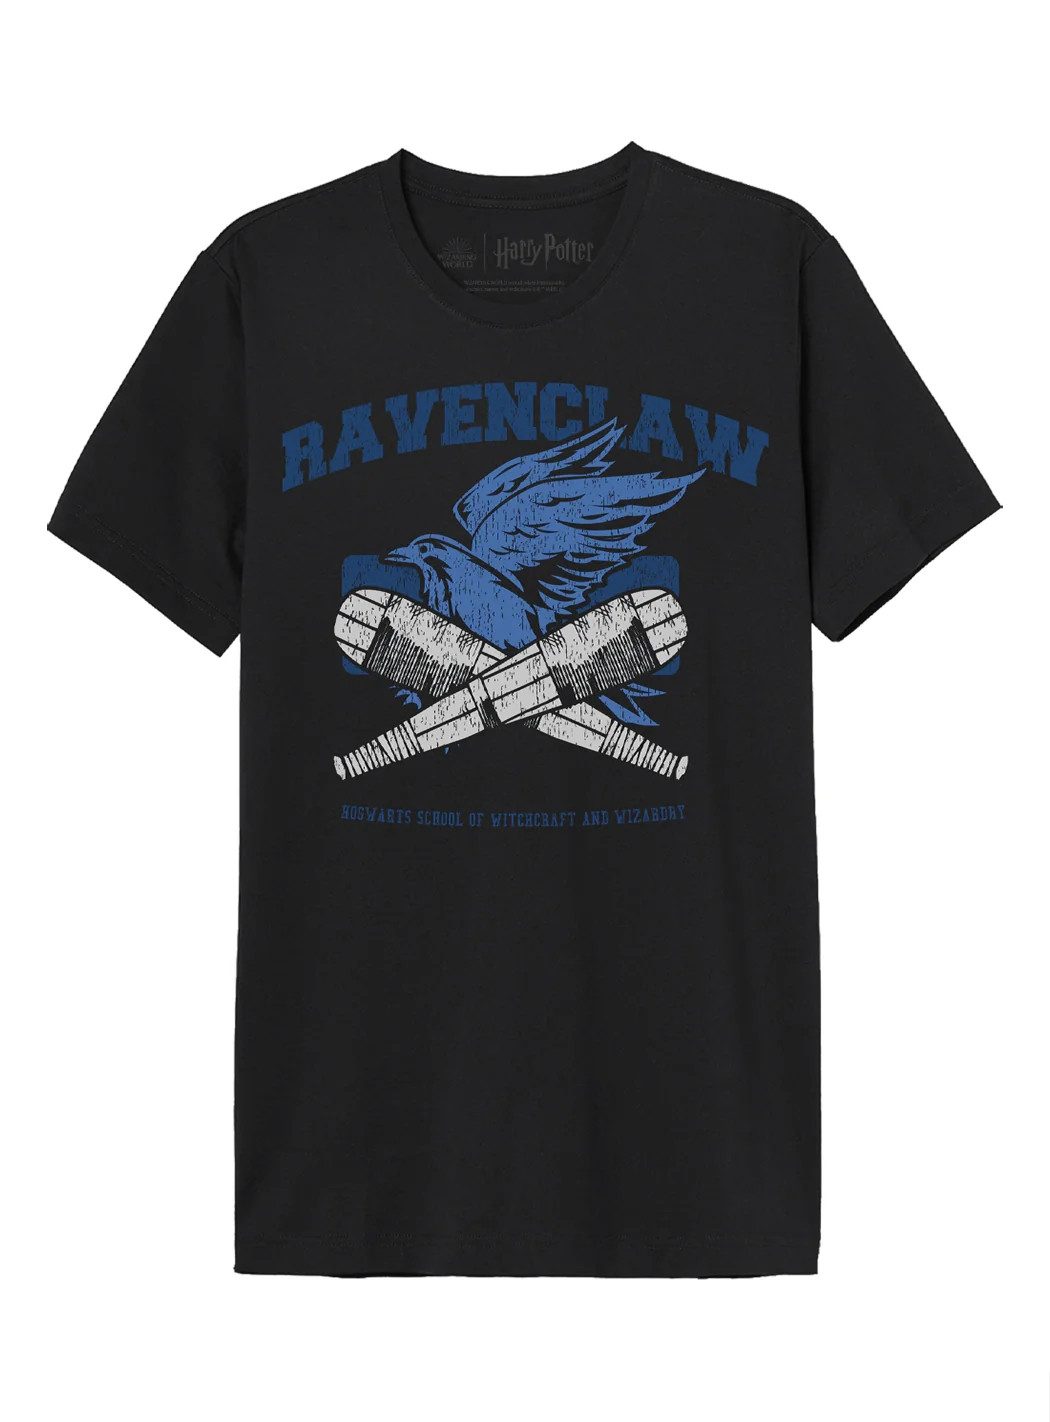 Harry Potter T-Shirt Ravenclaw Quidditch